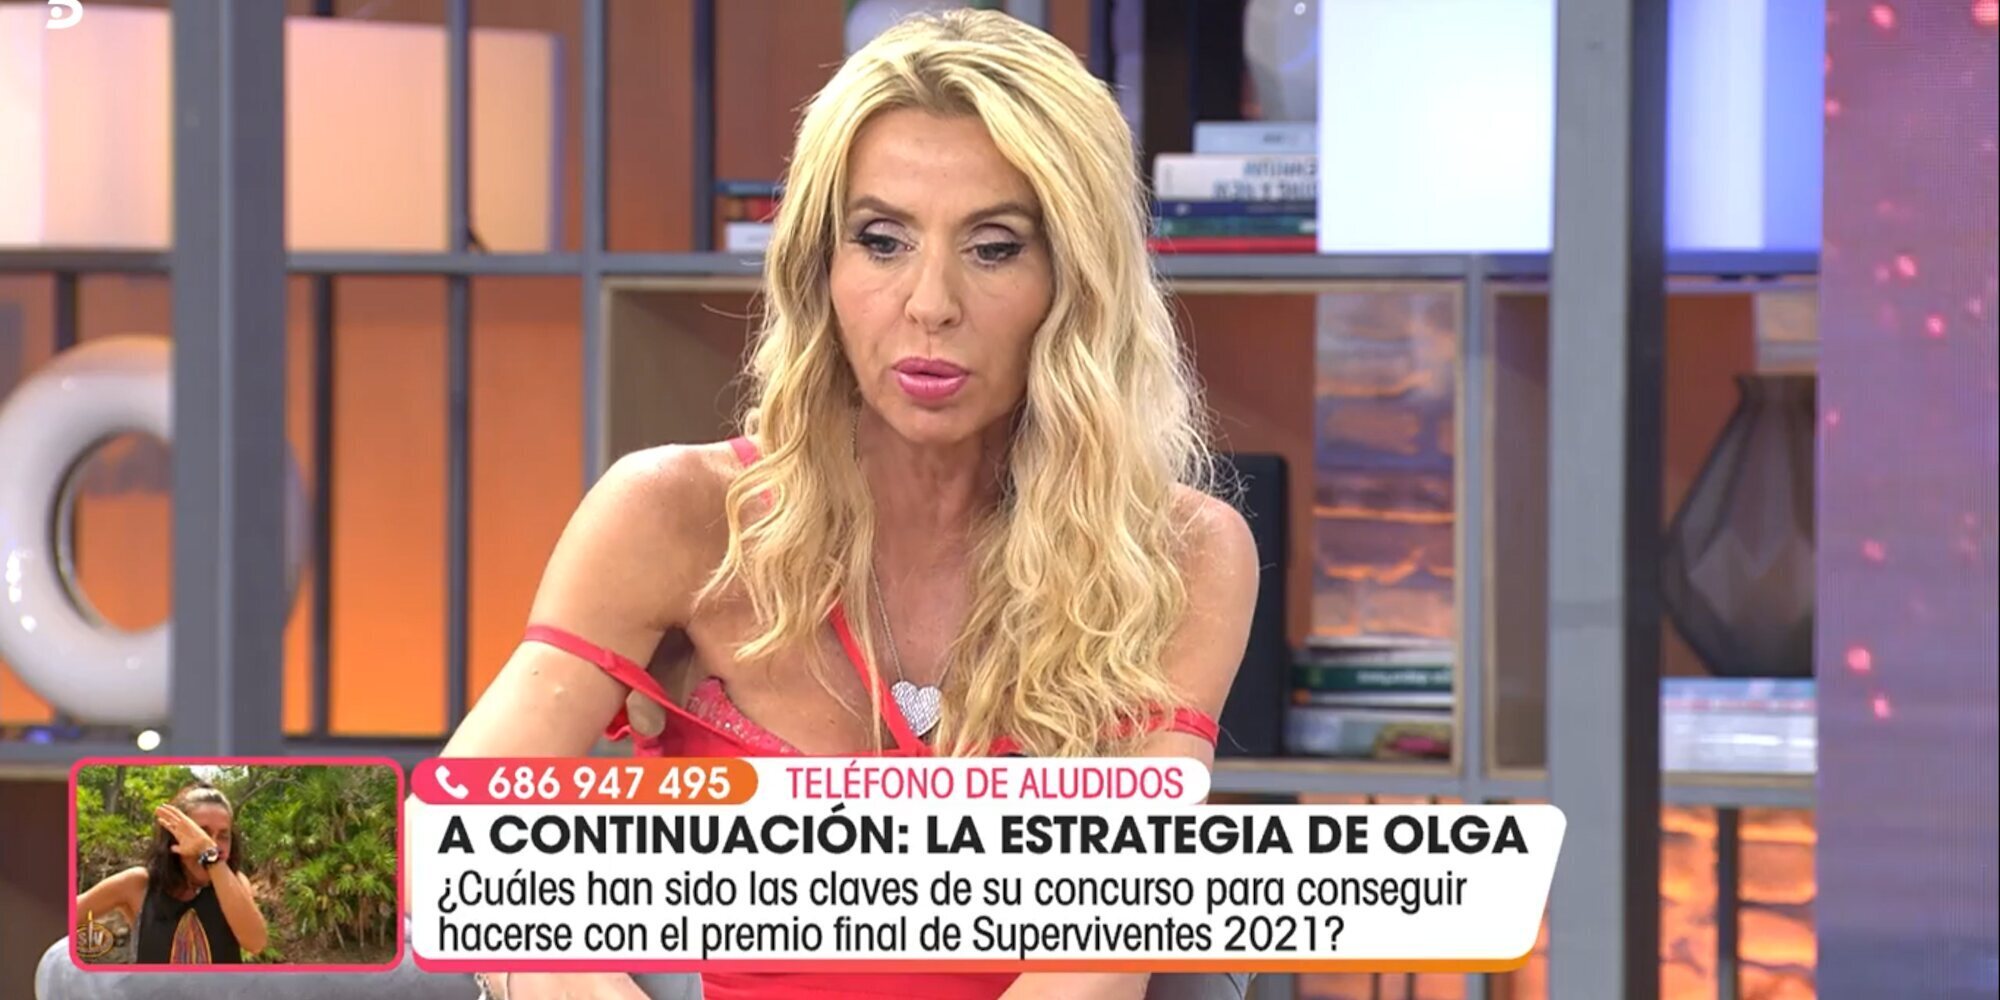 Valeria Marini, decepcionada por Olga Moreno: "Me siento traicionada"